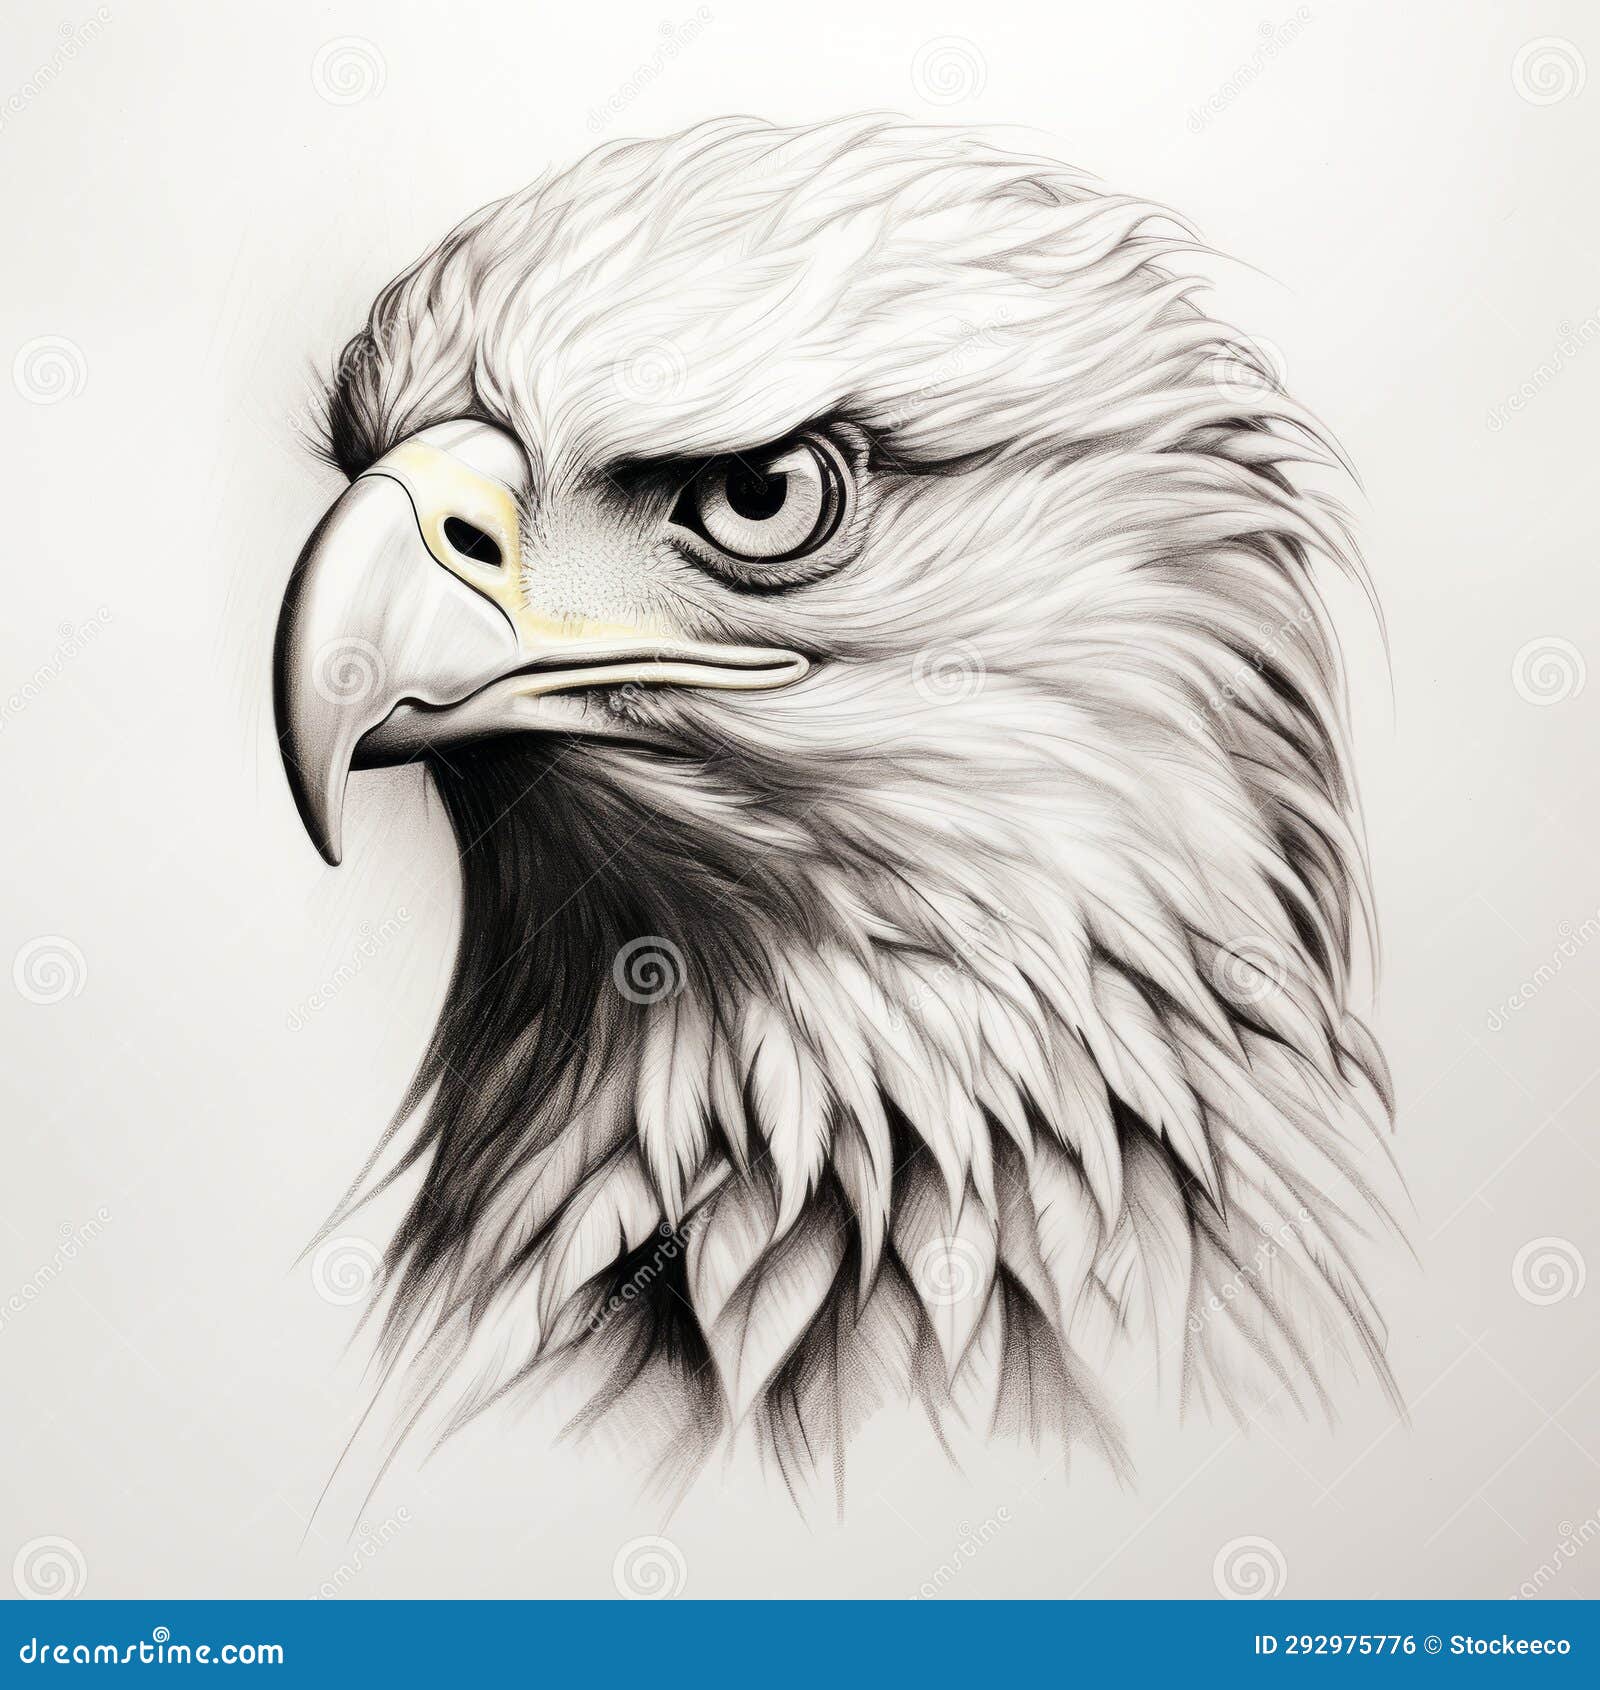 Keith Groves eagle head tattoo Artistic Ink | smoochydeaux2 | Flickr